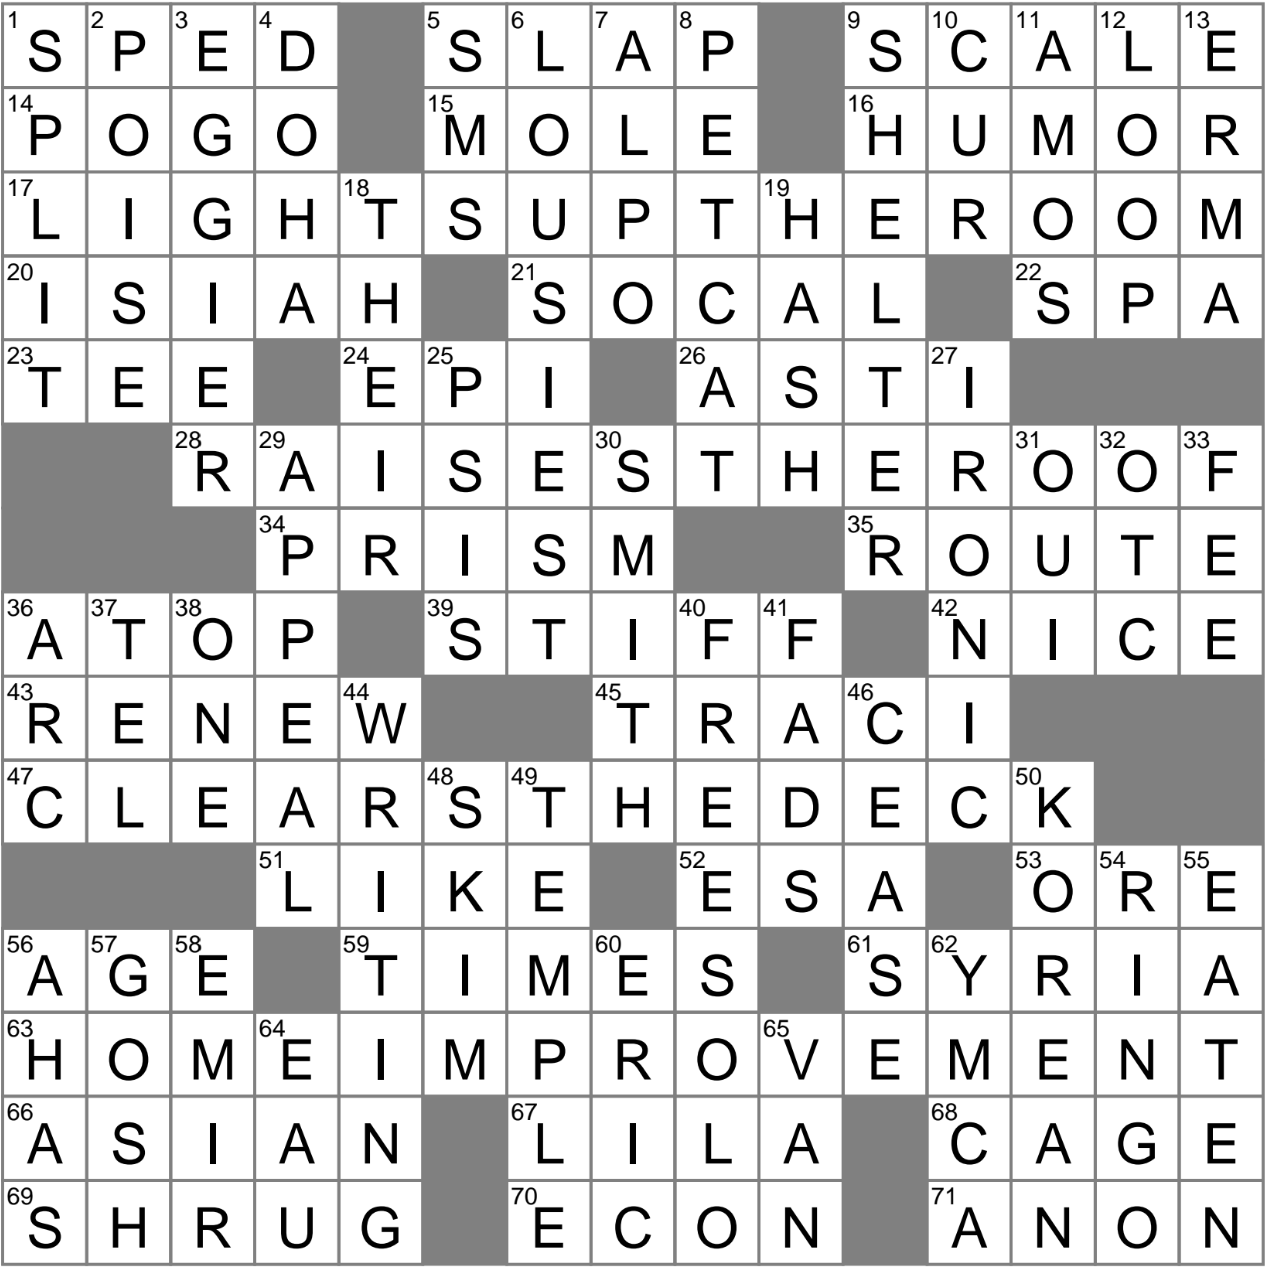 scope of influence crossword clue